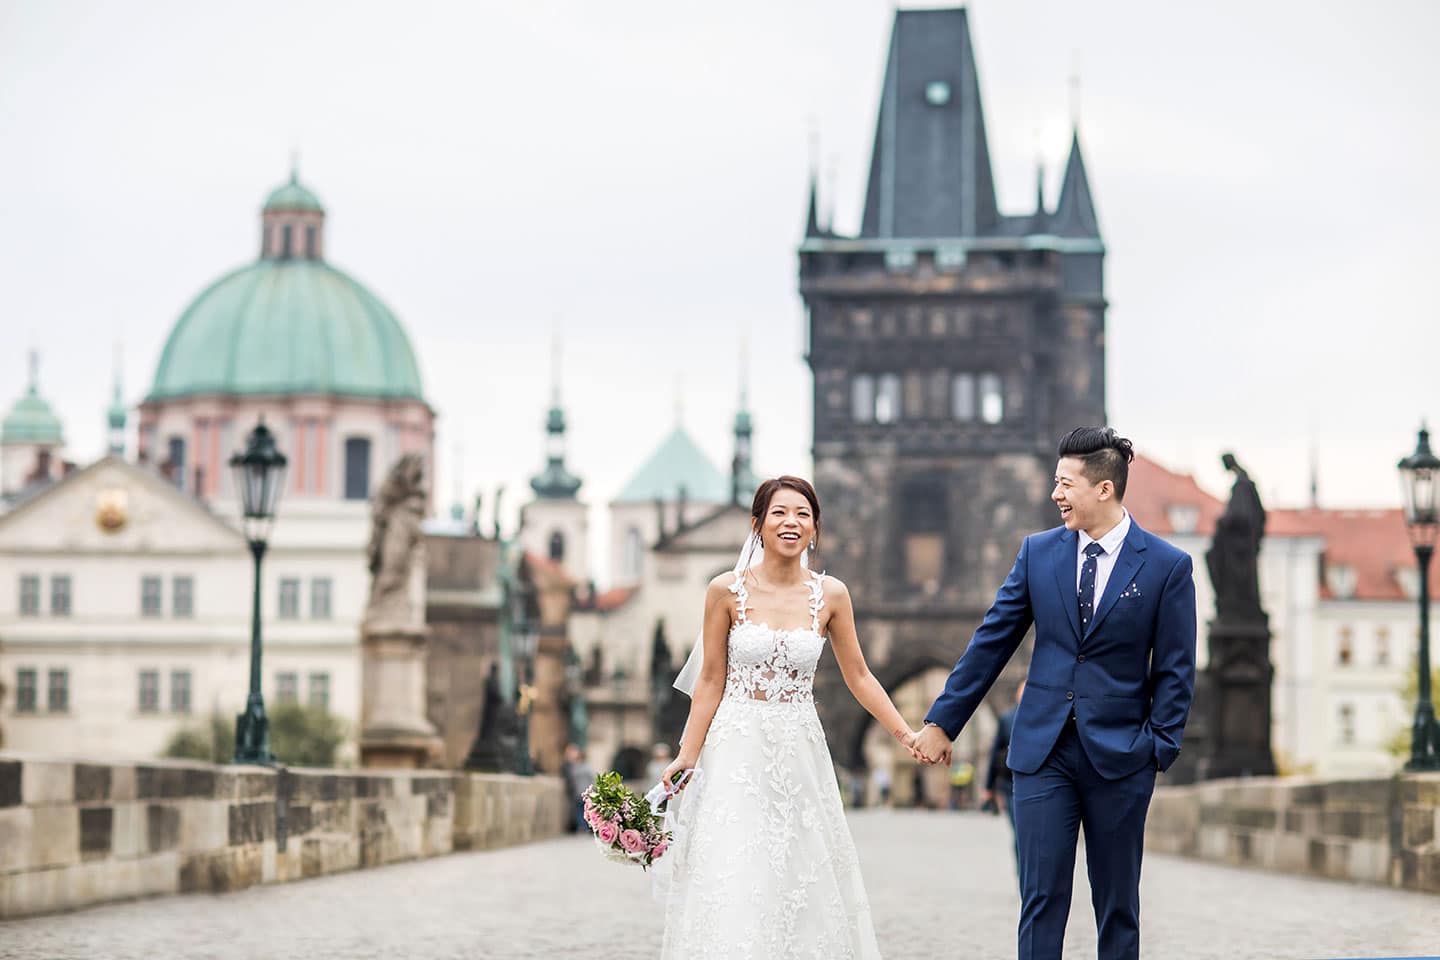 Prewedding photography in Prague